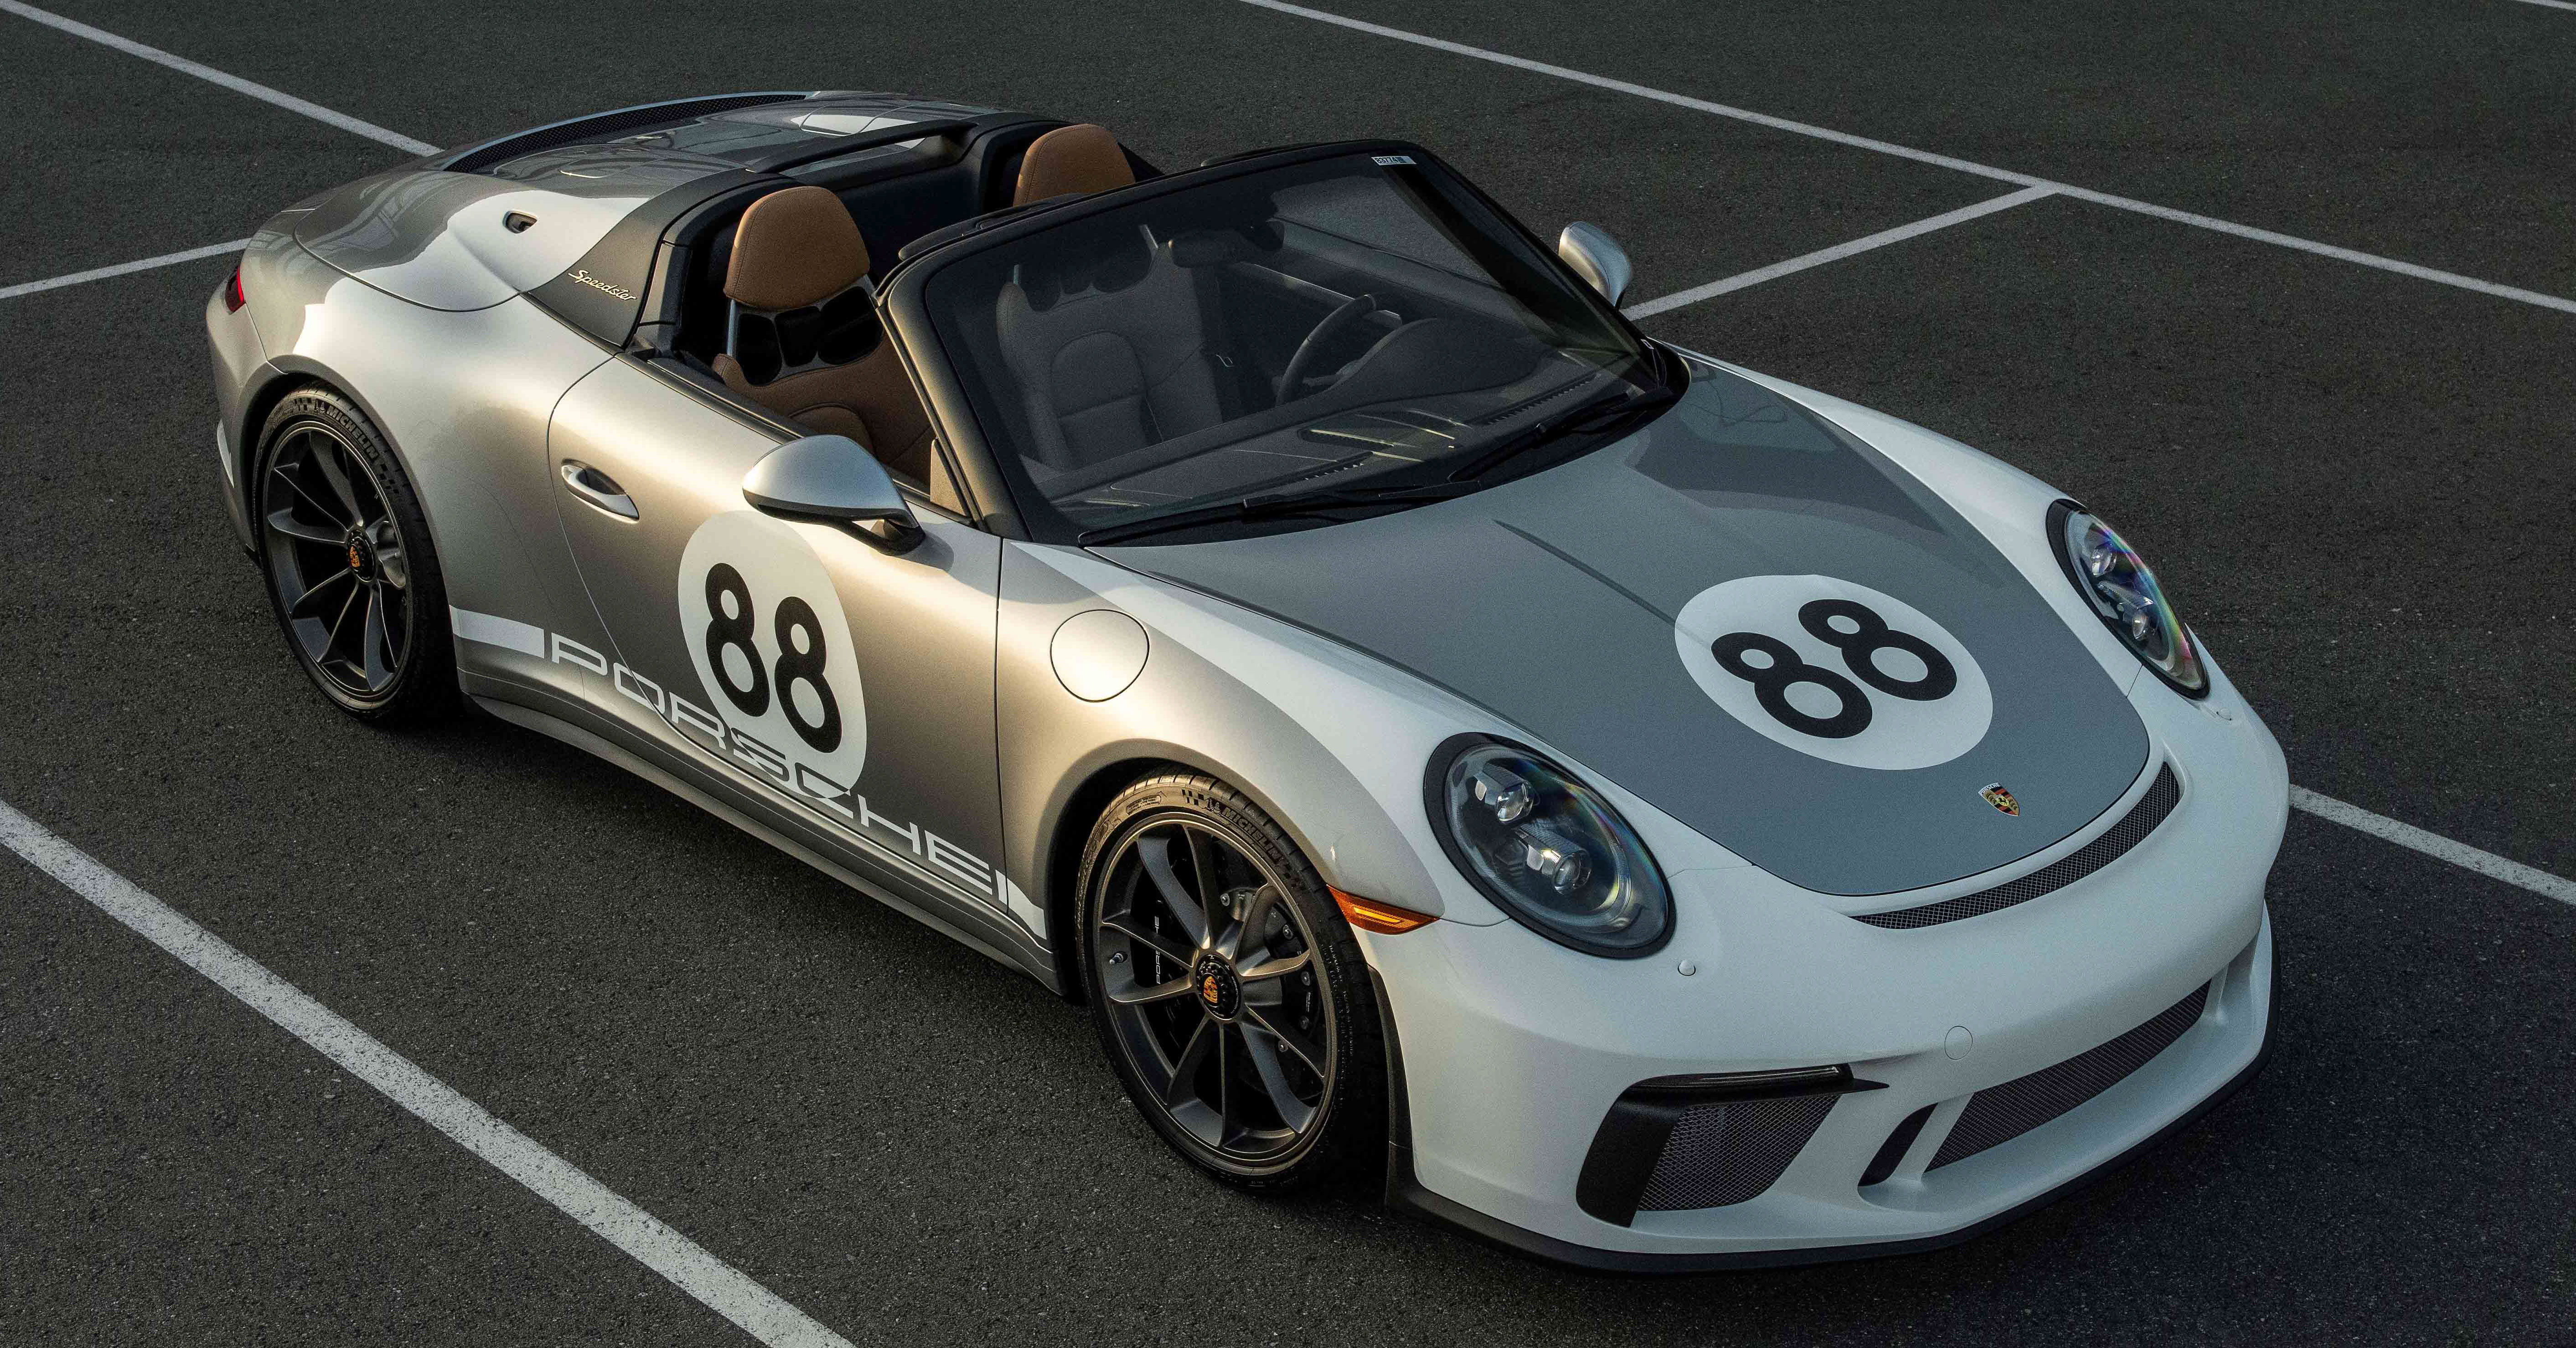 Porsche speedster